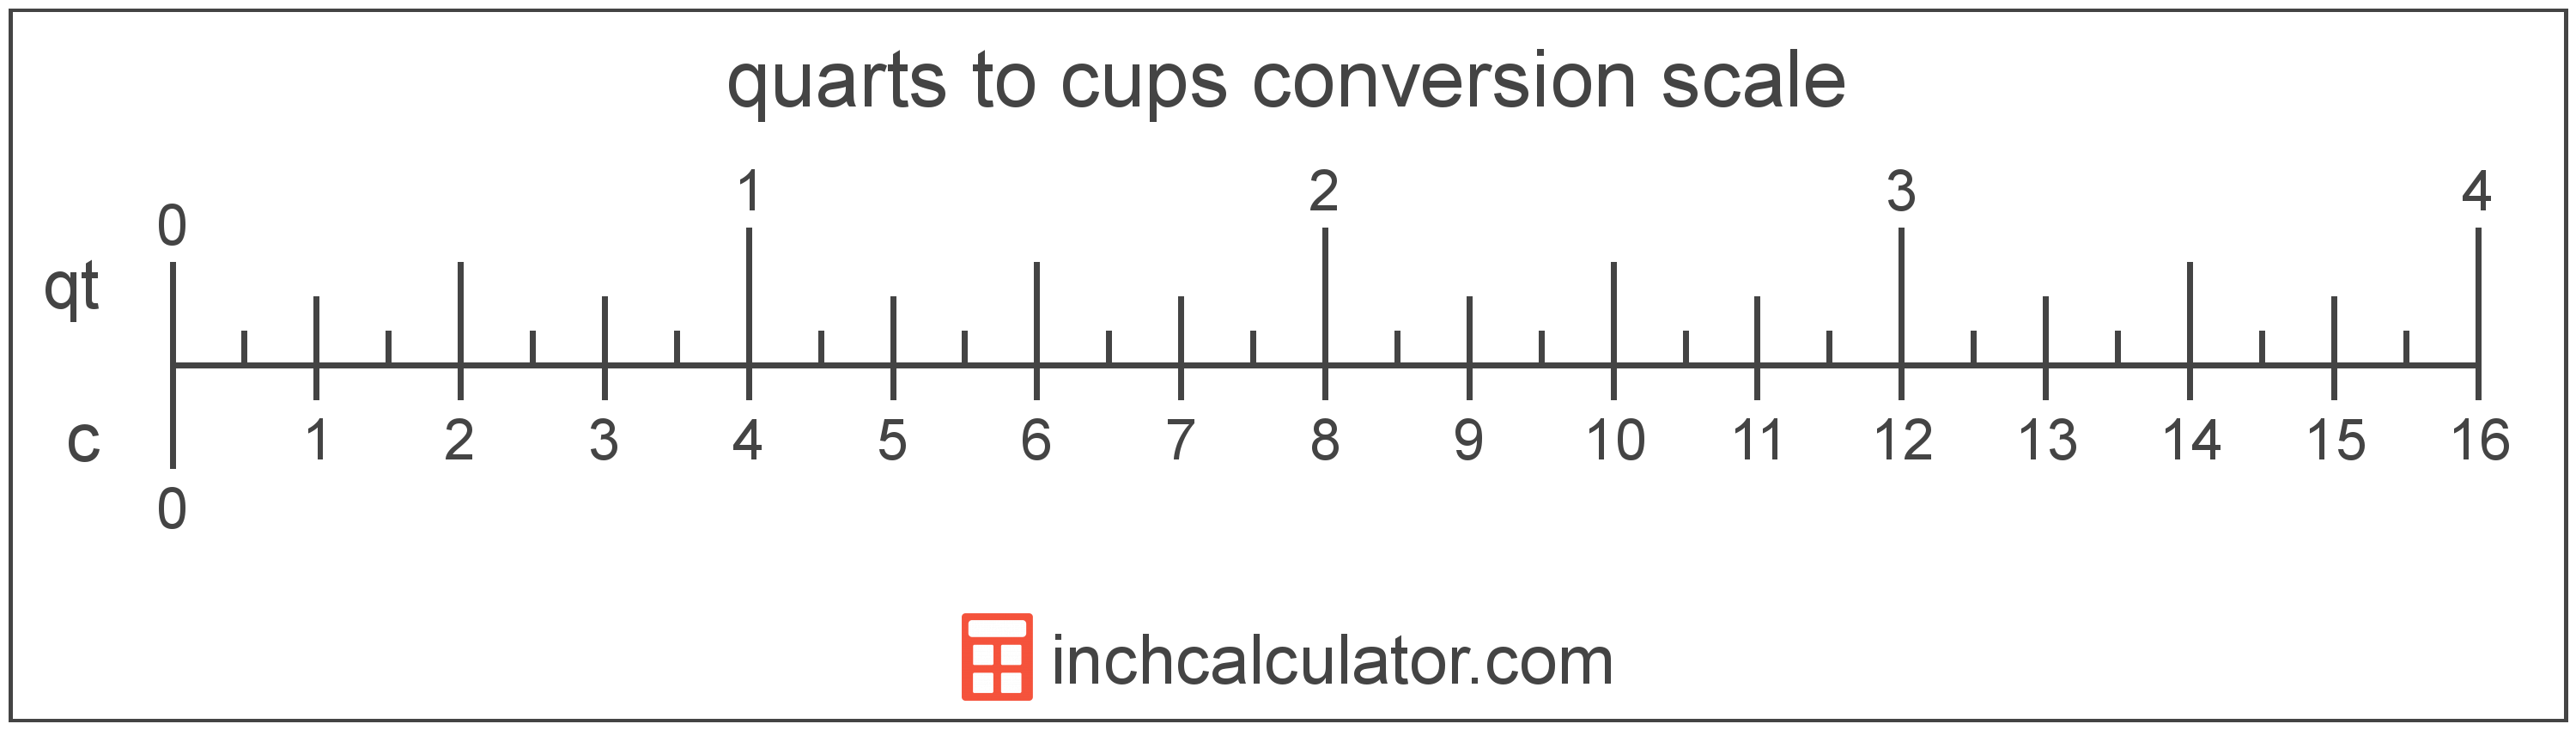 cups-to-quarts-conversion-c-to-qt-inch-calculator